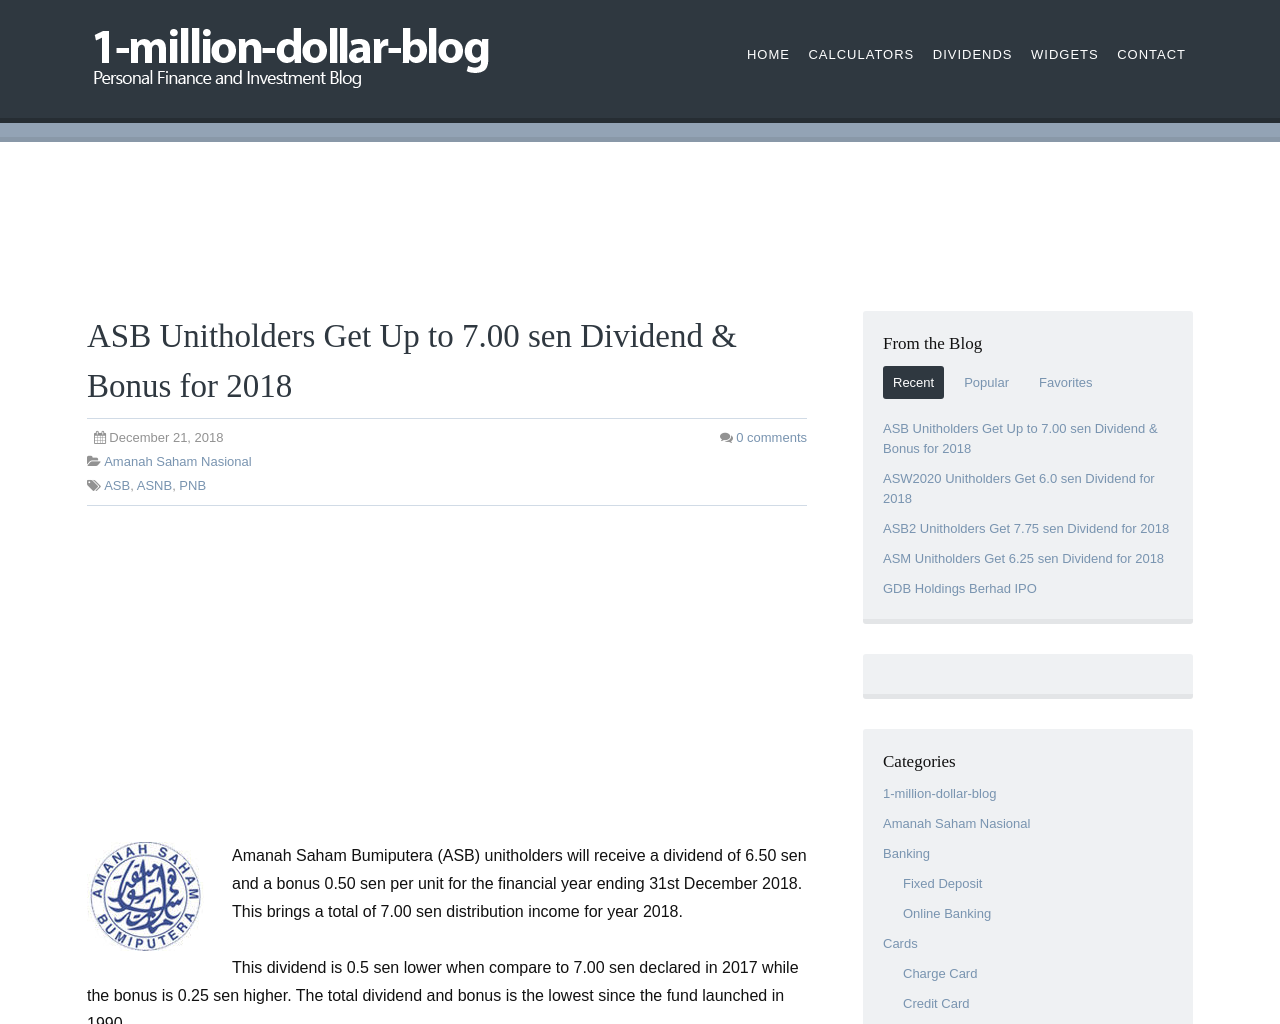 1-million-dollar-blog.com